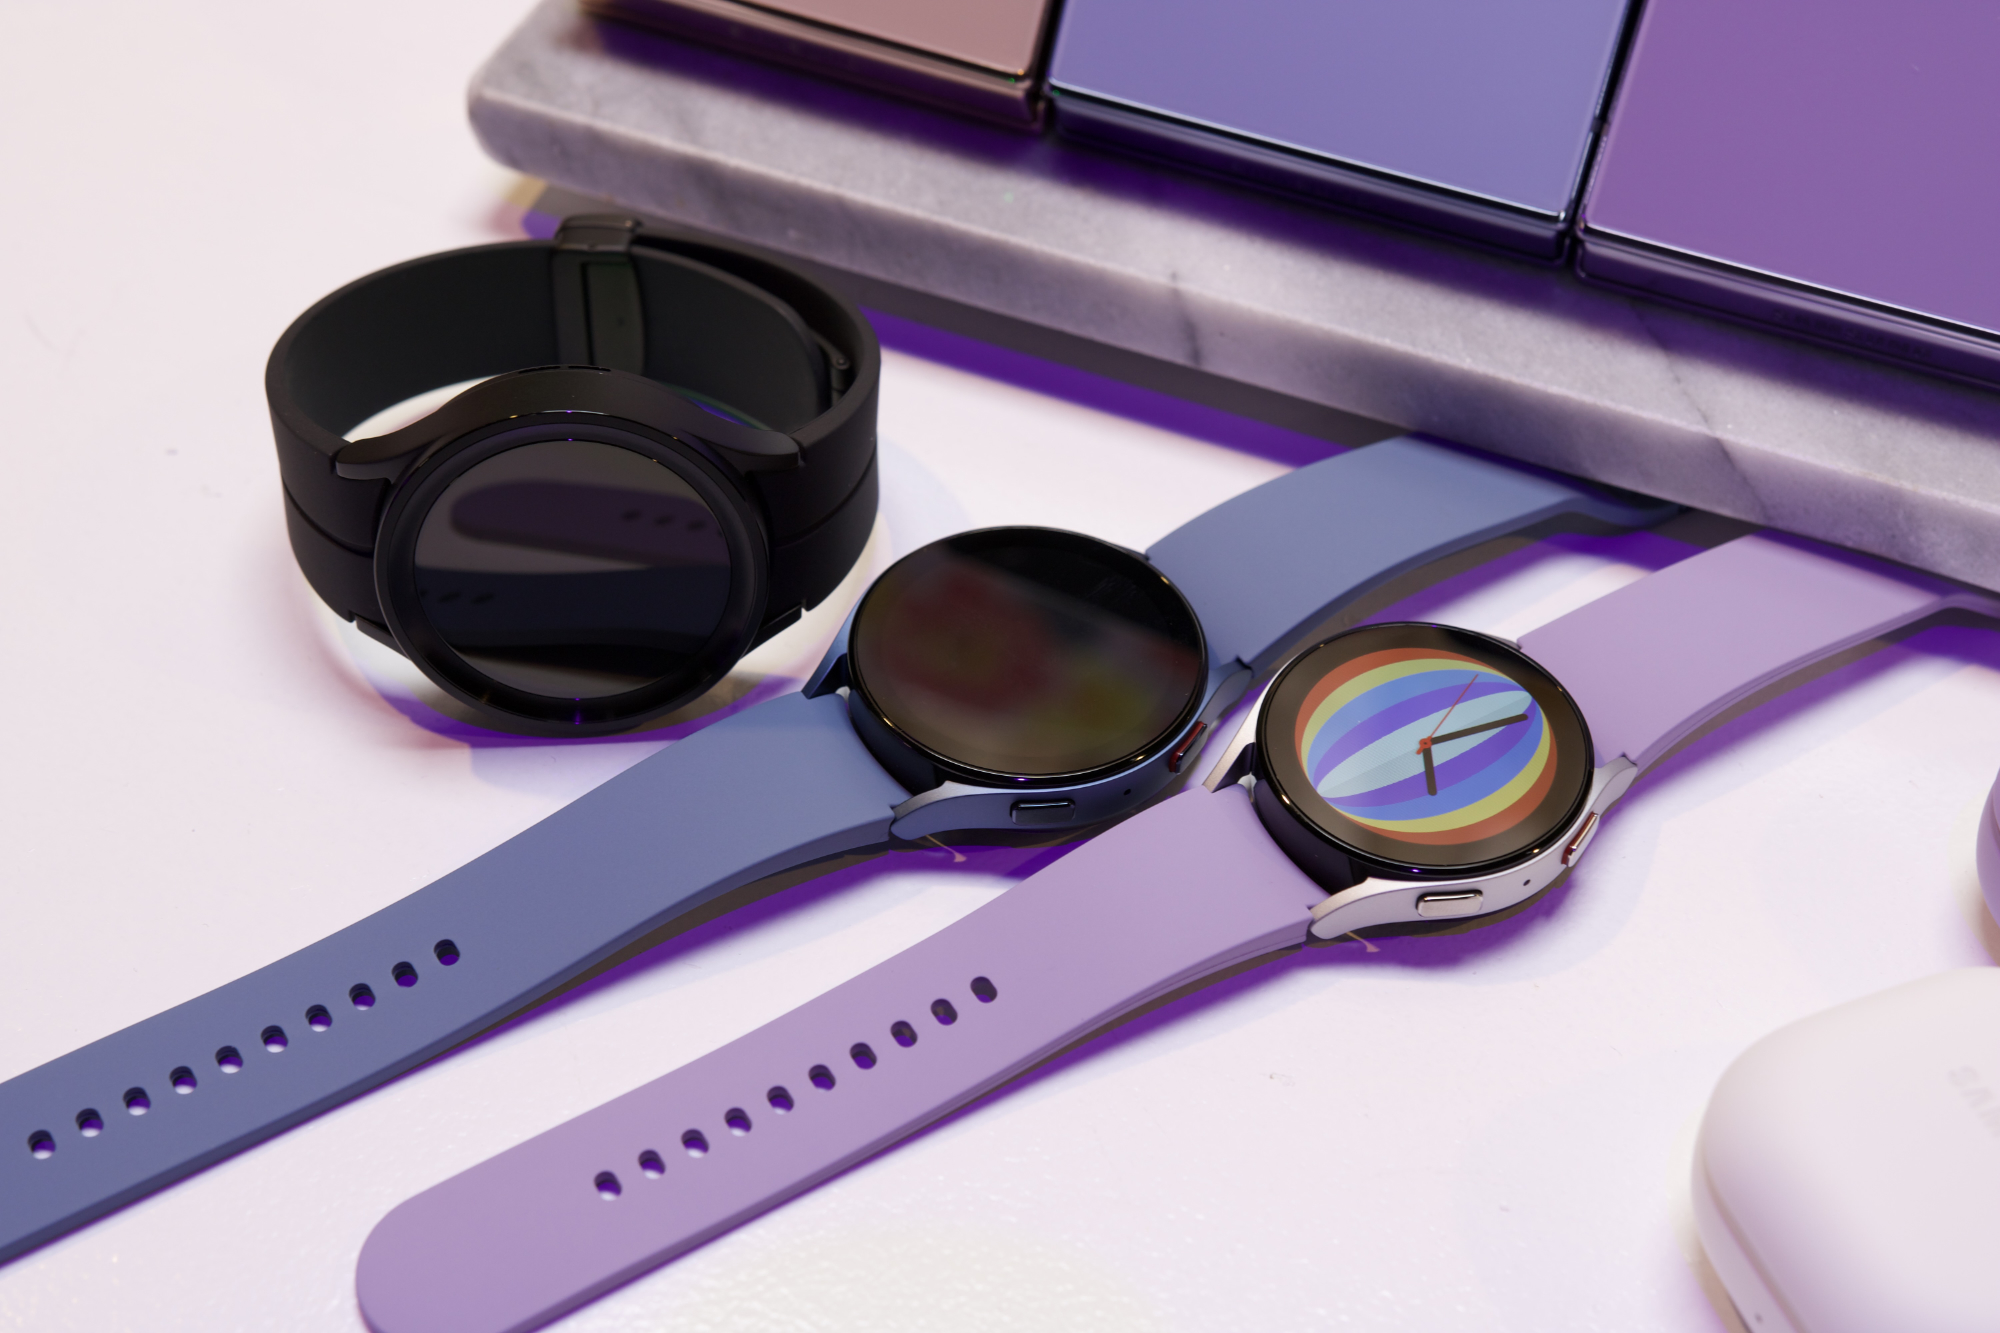 StrapsCo Mesh Band for Samsung Galaxy Watch 5 & Galaxy Watch 4